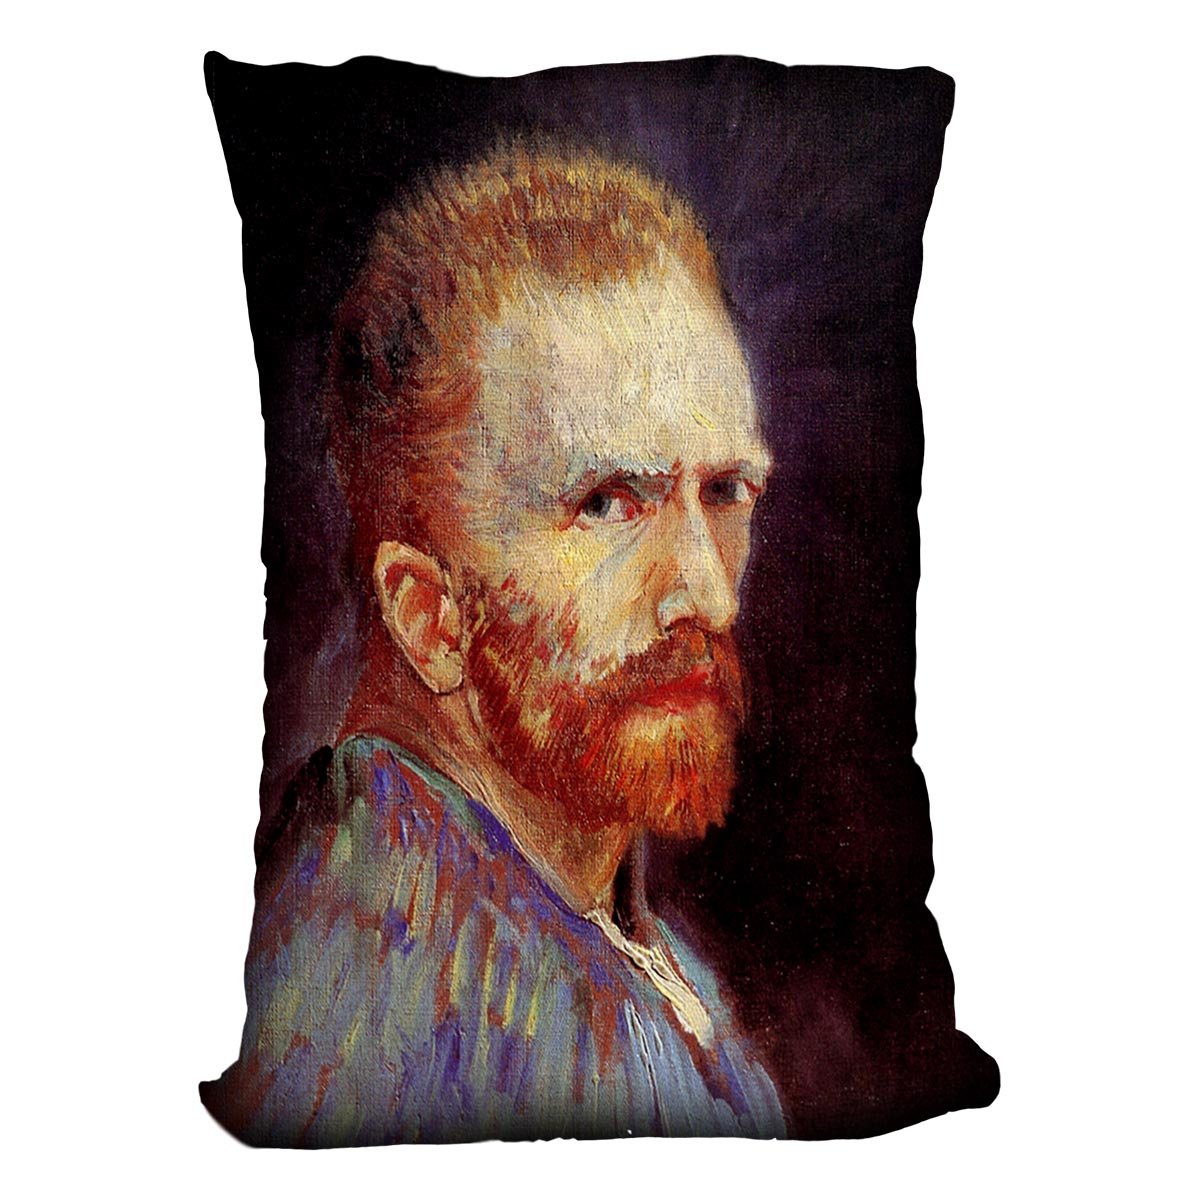 Self-Portrait 9 by Van Gogh Throw Pillow